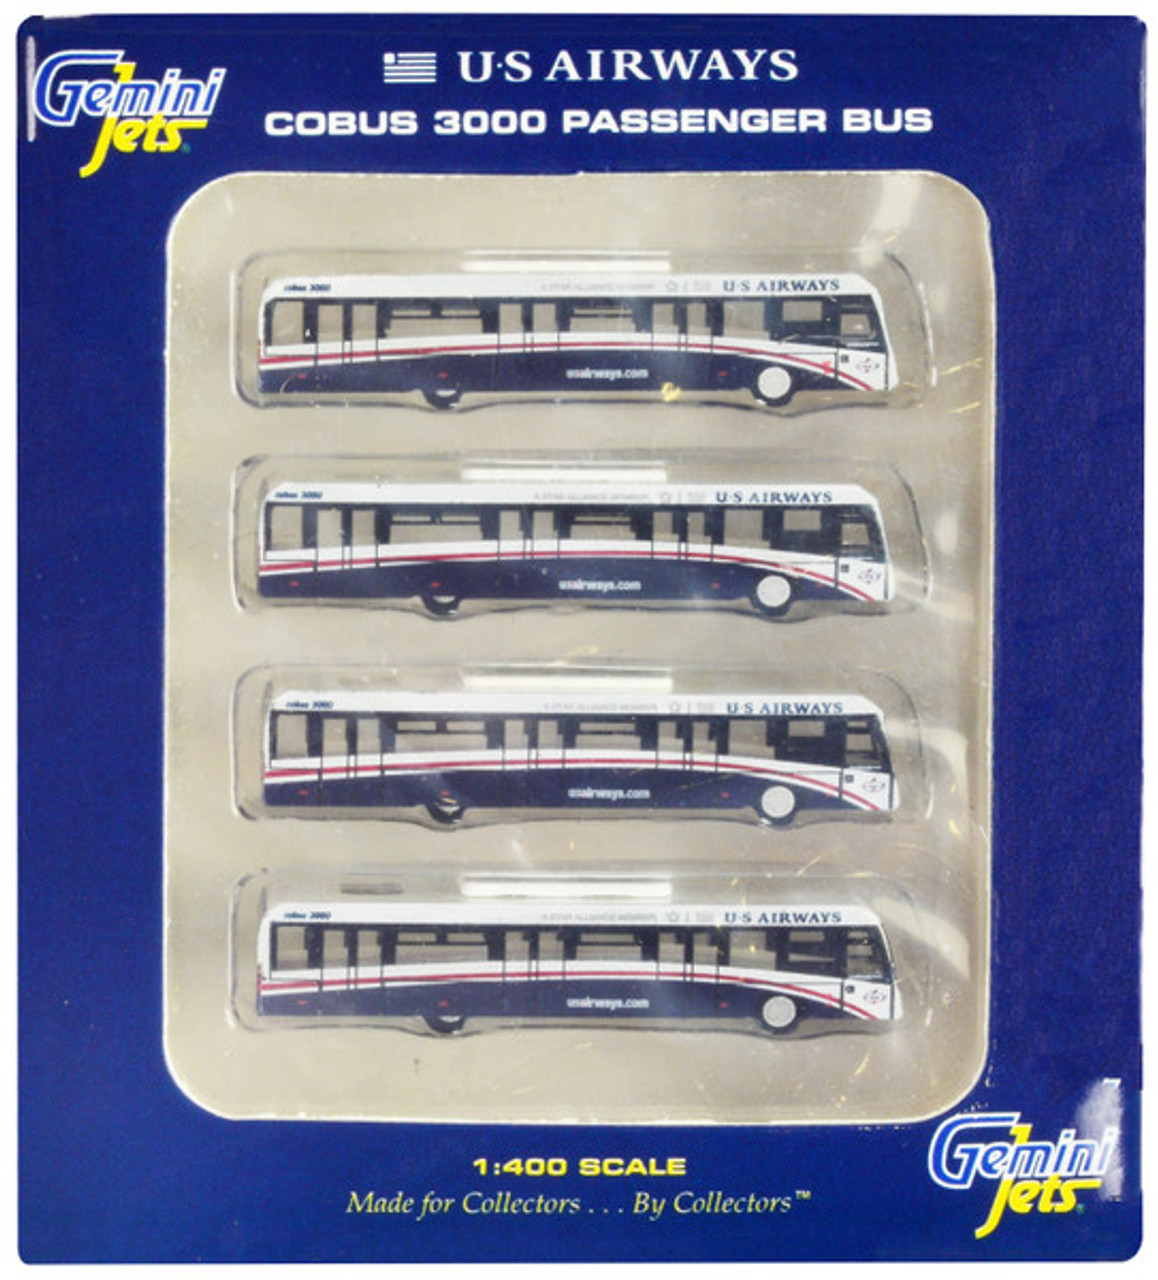 Cobus 3000 Passenger Bus White and Blue "US Airways Shuttle Bus" 4 Piece Set 1/400 Diecast Models by GeminiJets